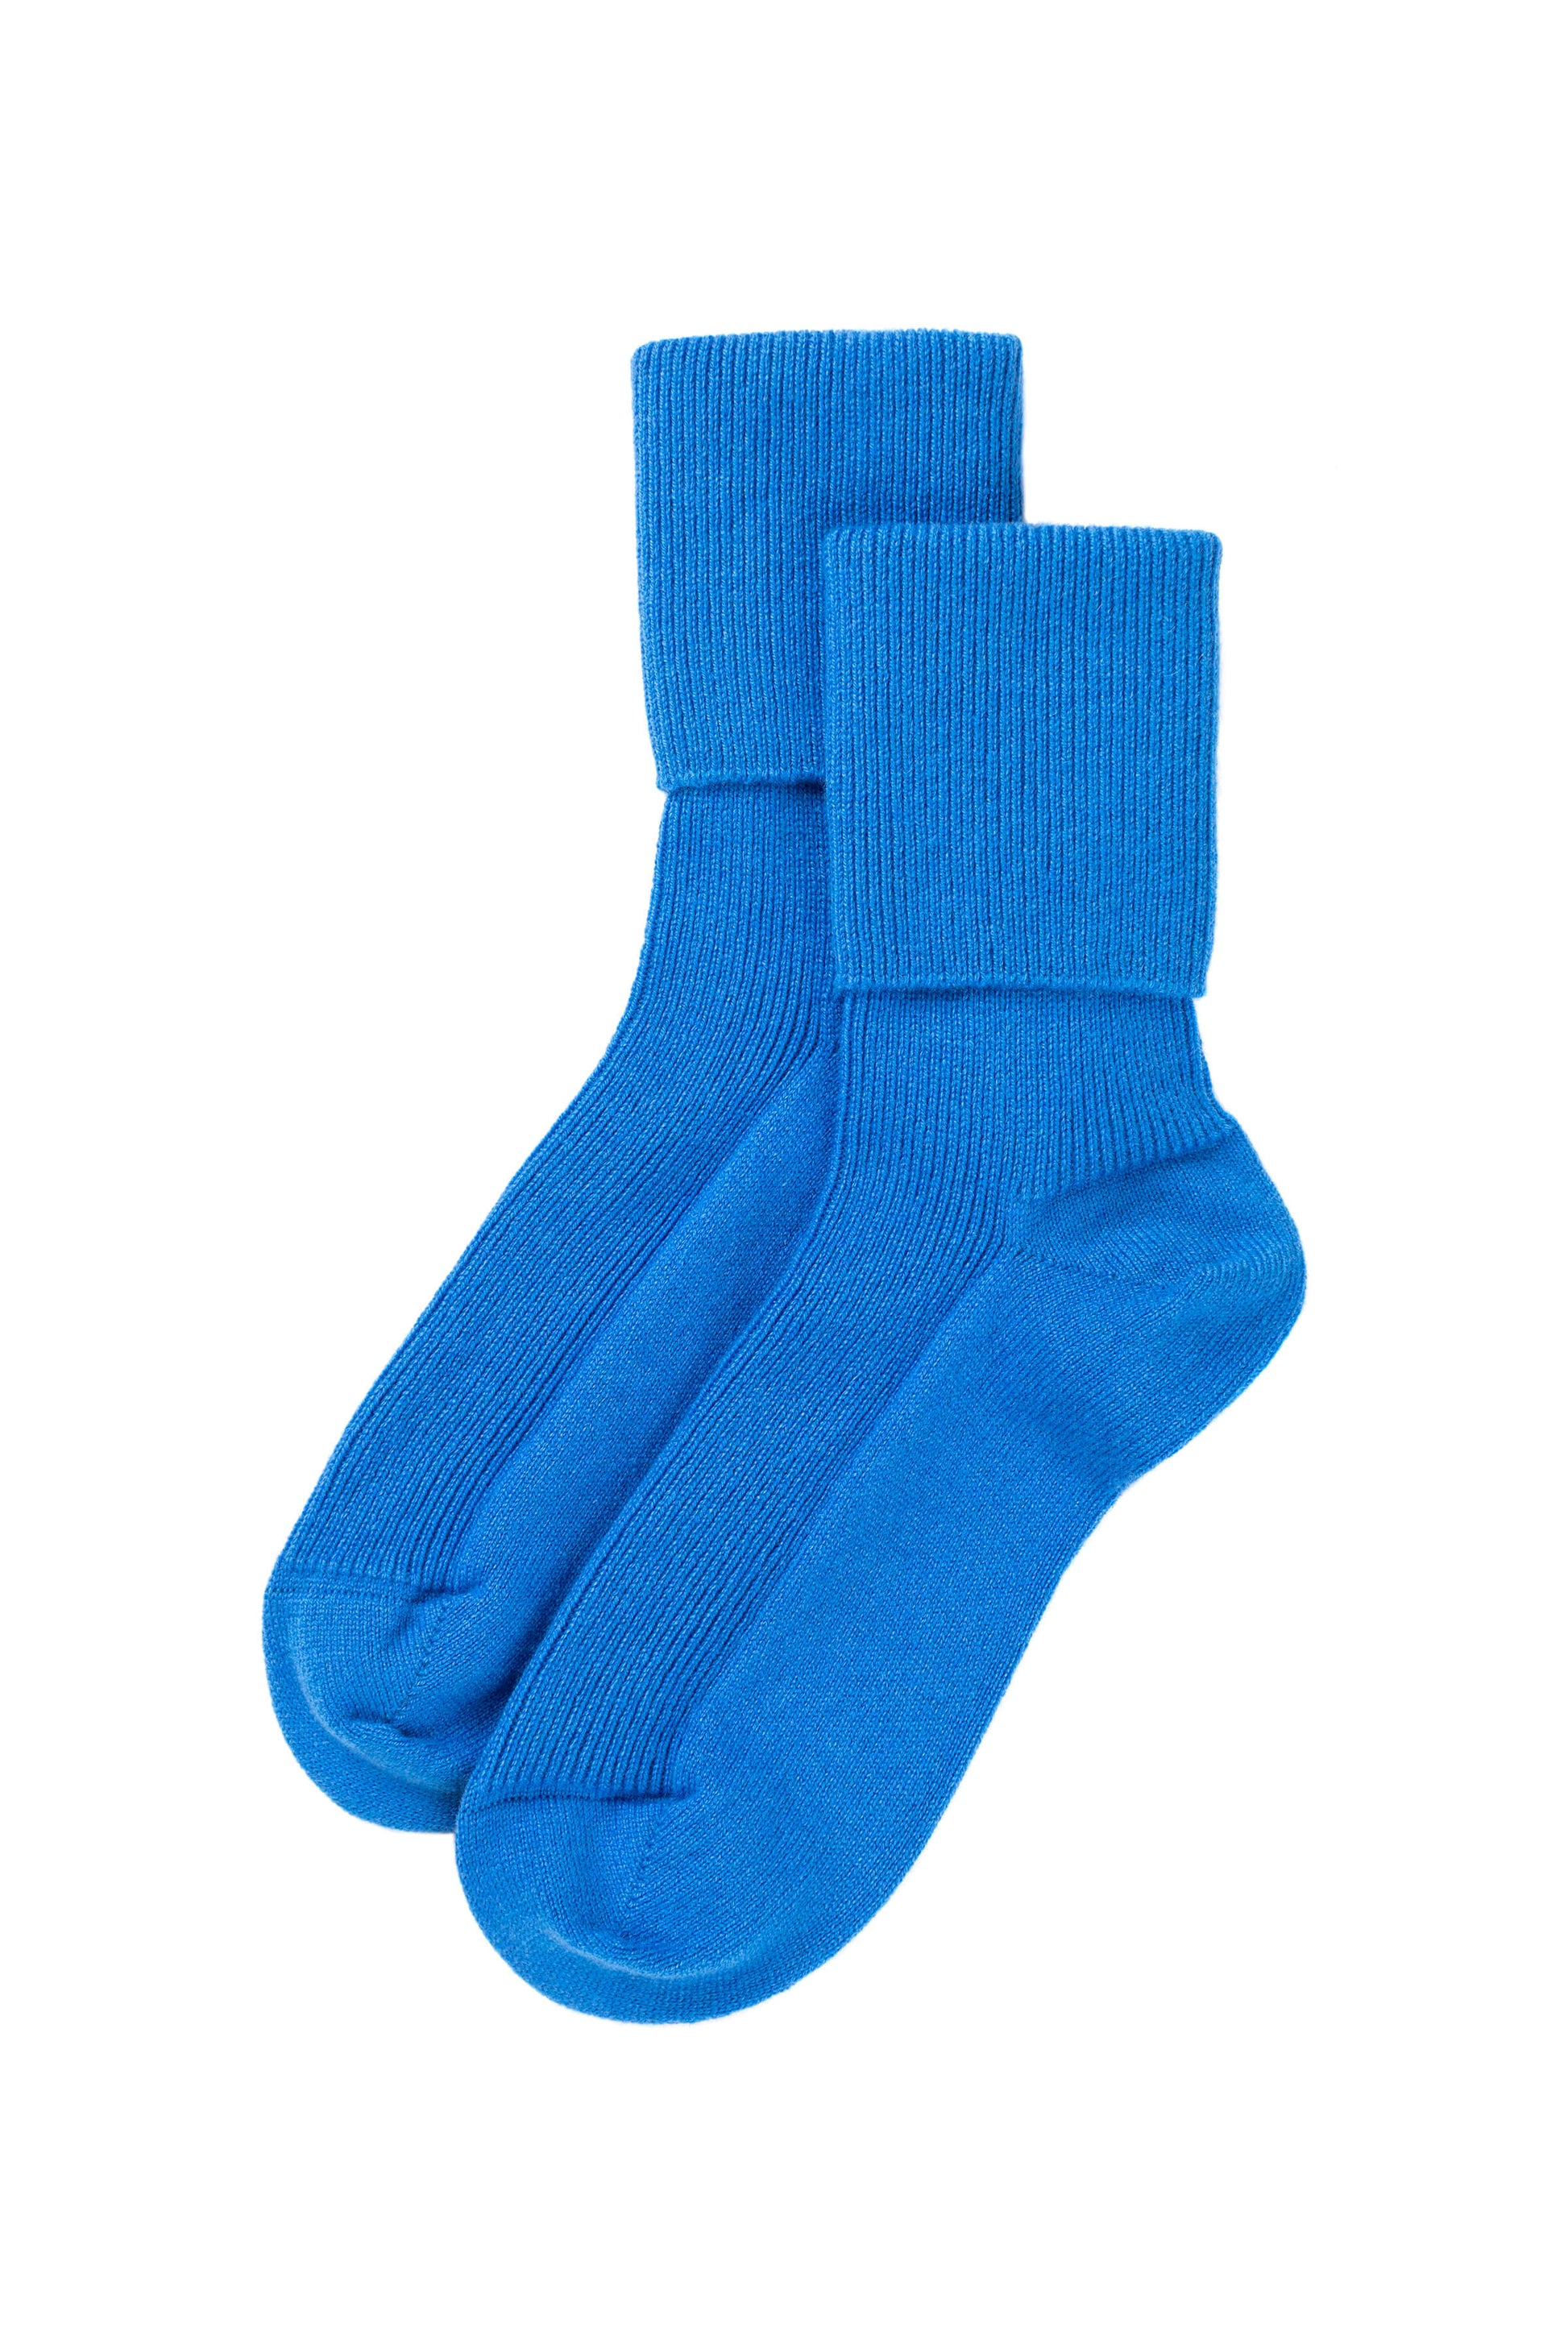 Johnstons of Elgin’s Orkney Blue Women's Cashmere Socks on a white background HBN00007SD4991